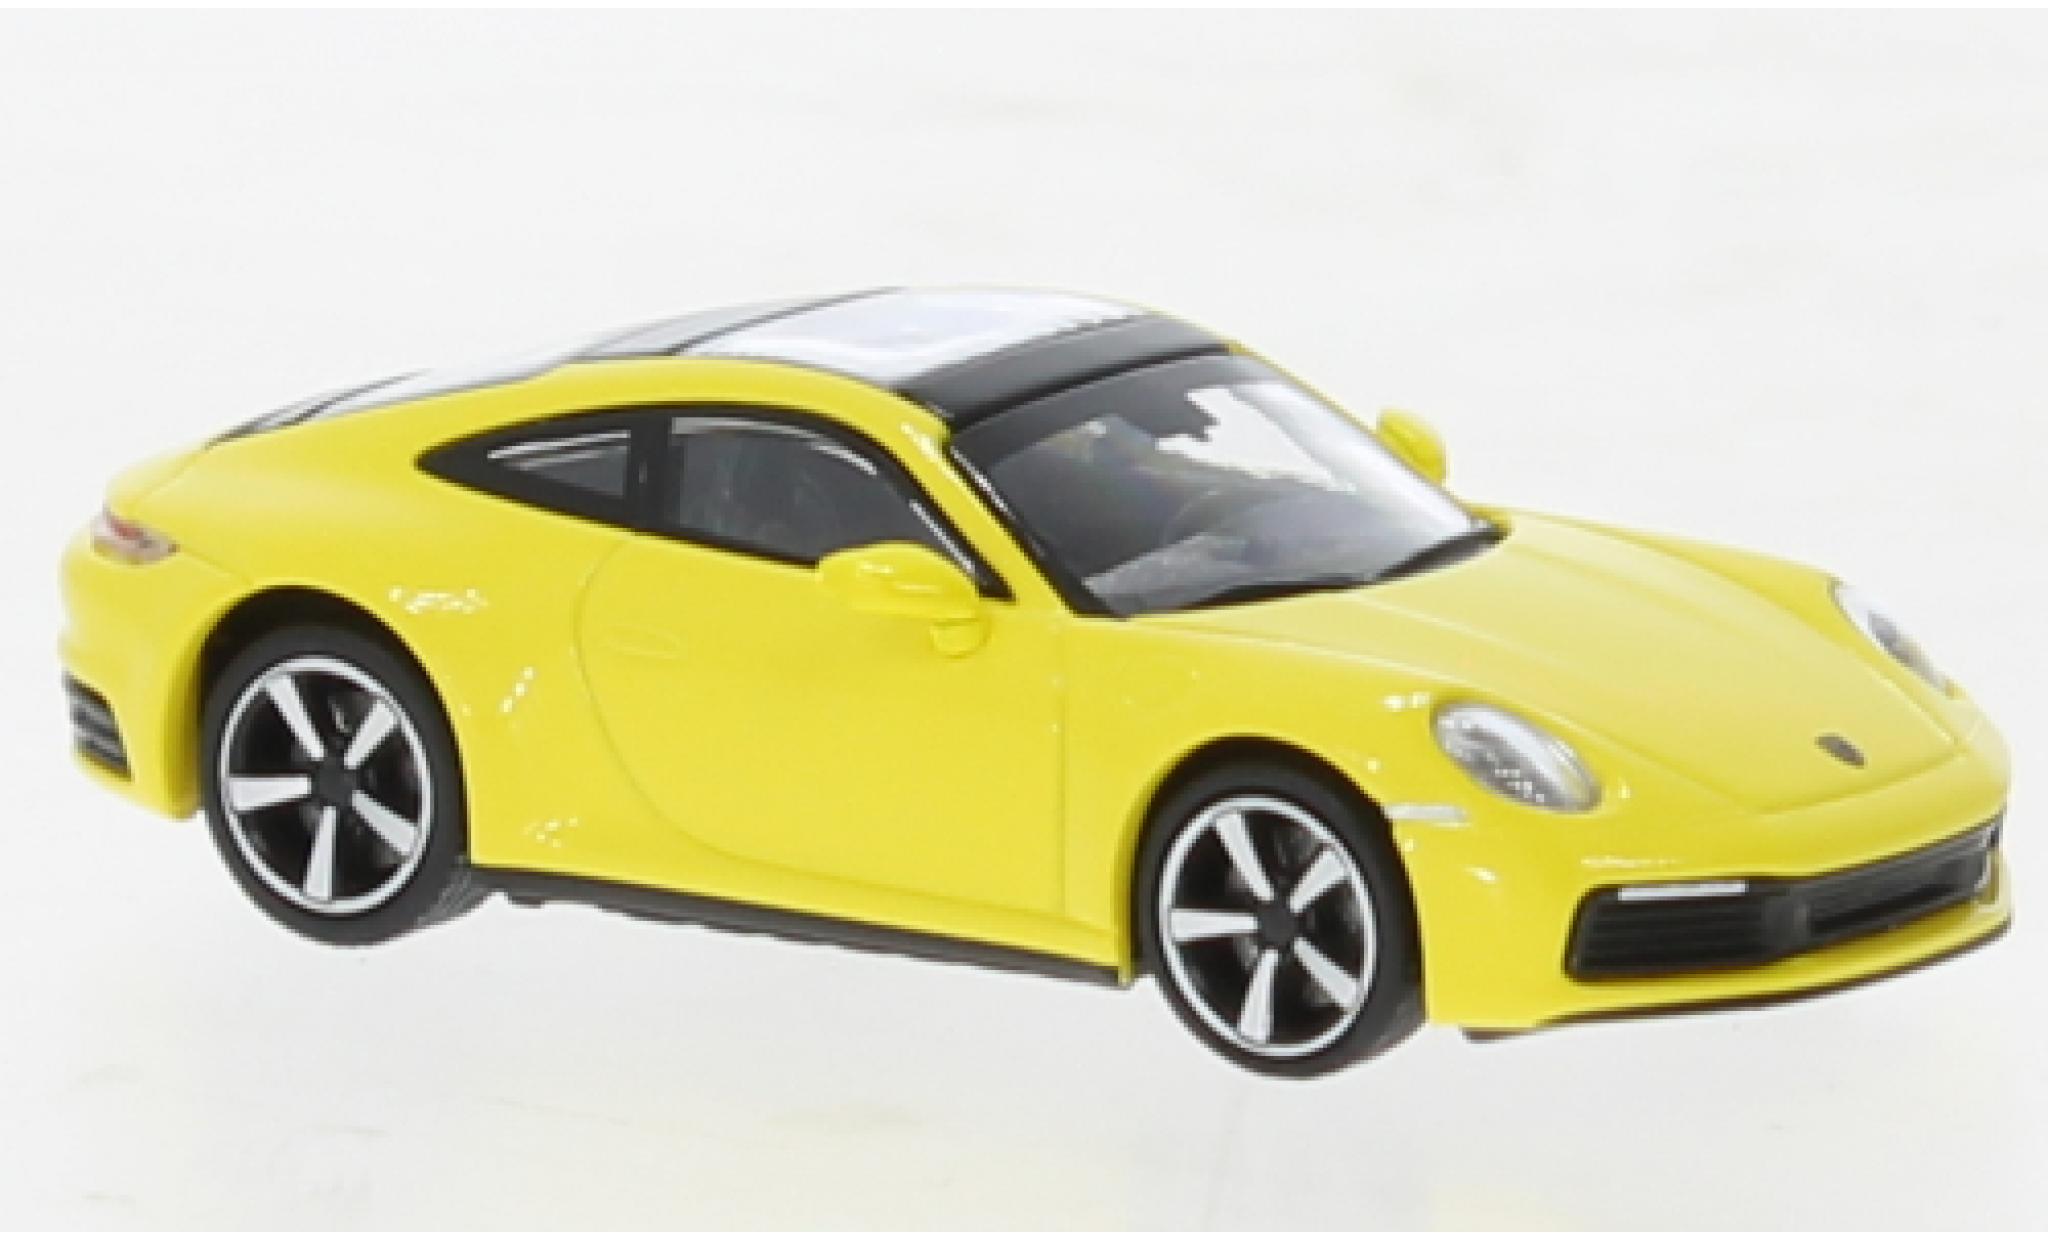 Porsche 911 Turbo S (991.2) 1:18 Model Car - Racing Yellow